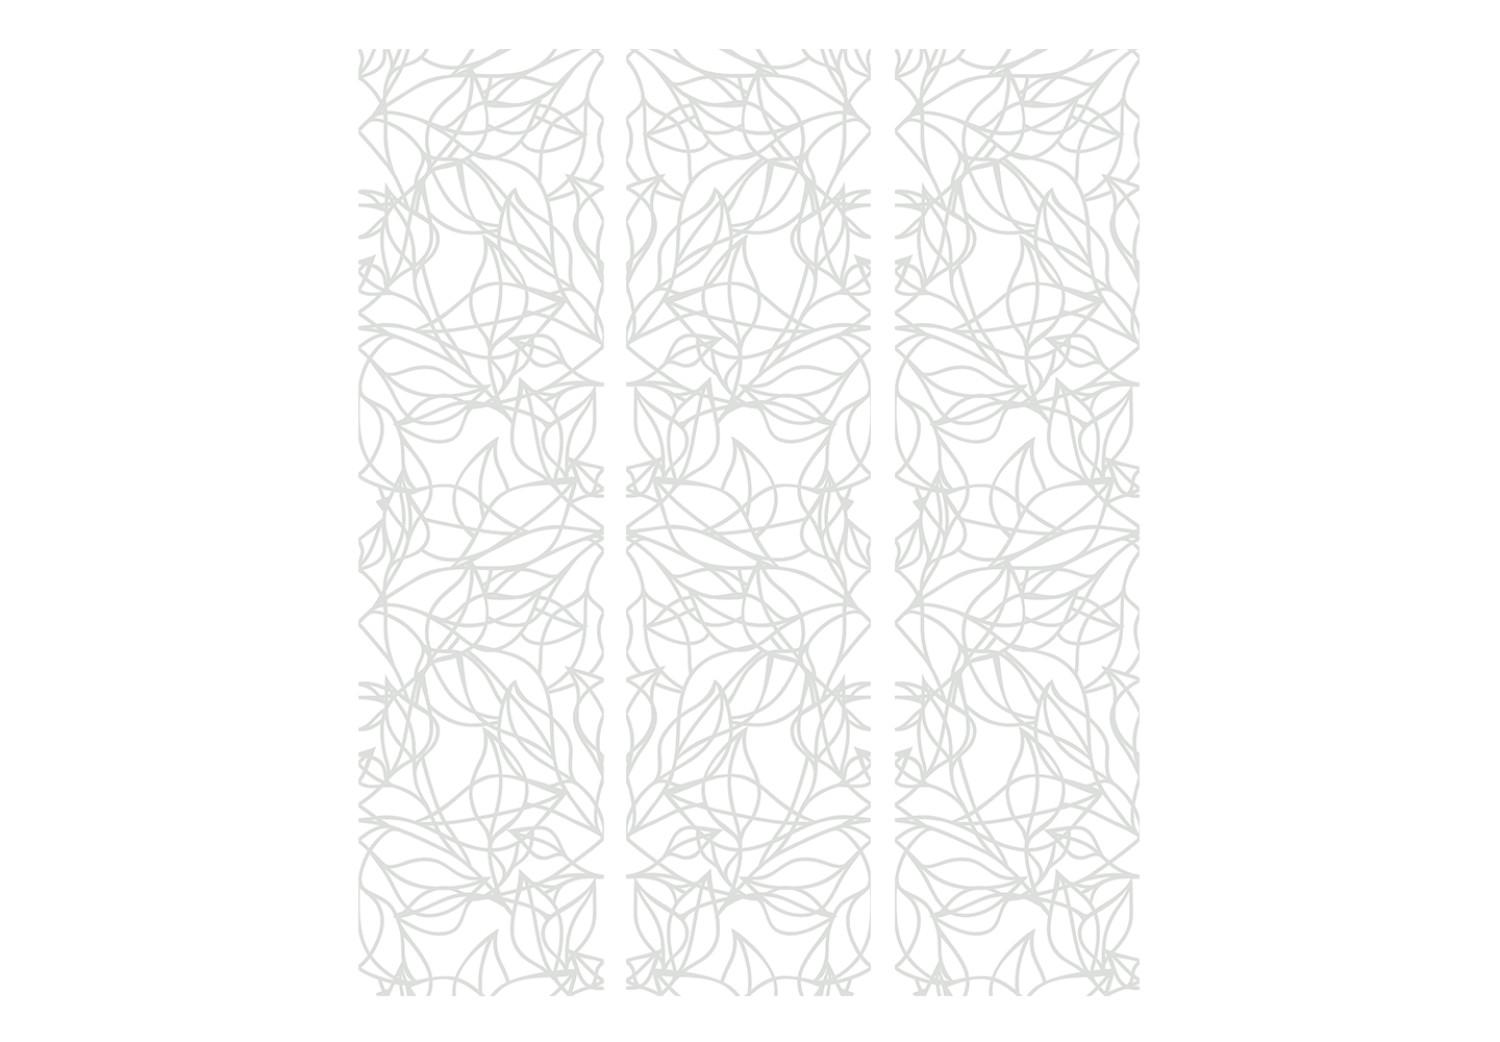 Biombo original Entretejido vegetal - líneas grises figuras geométricas fondo blanco